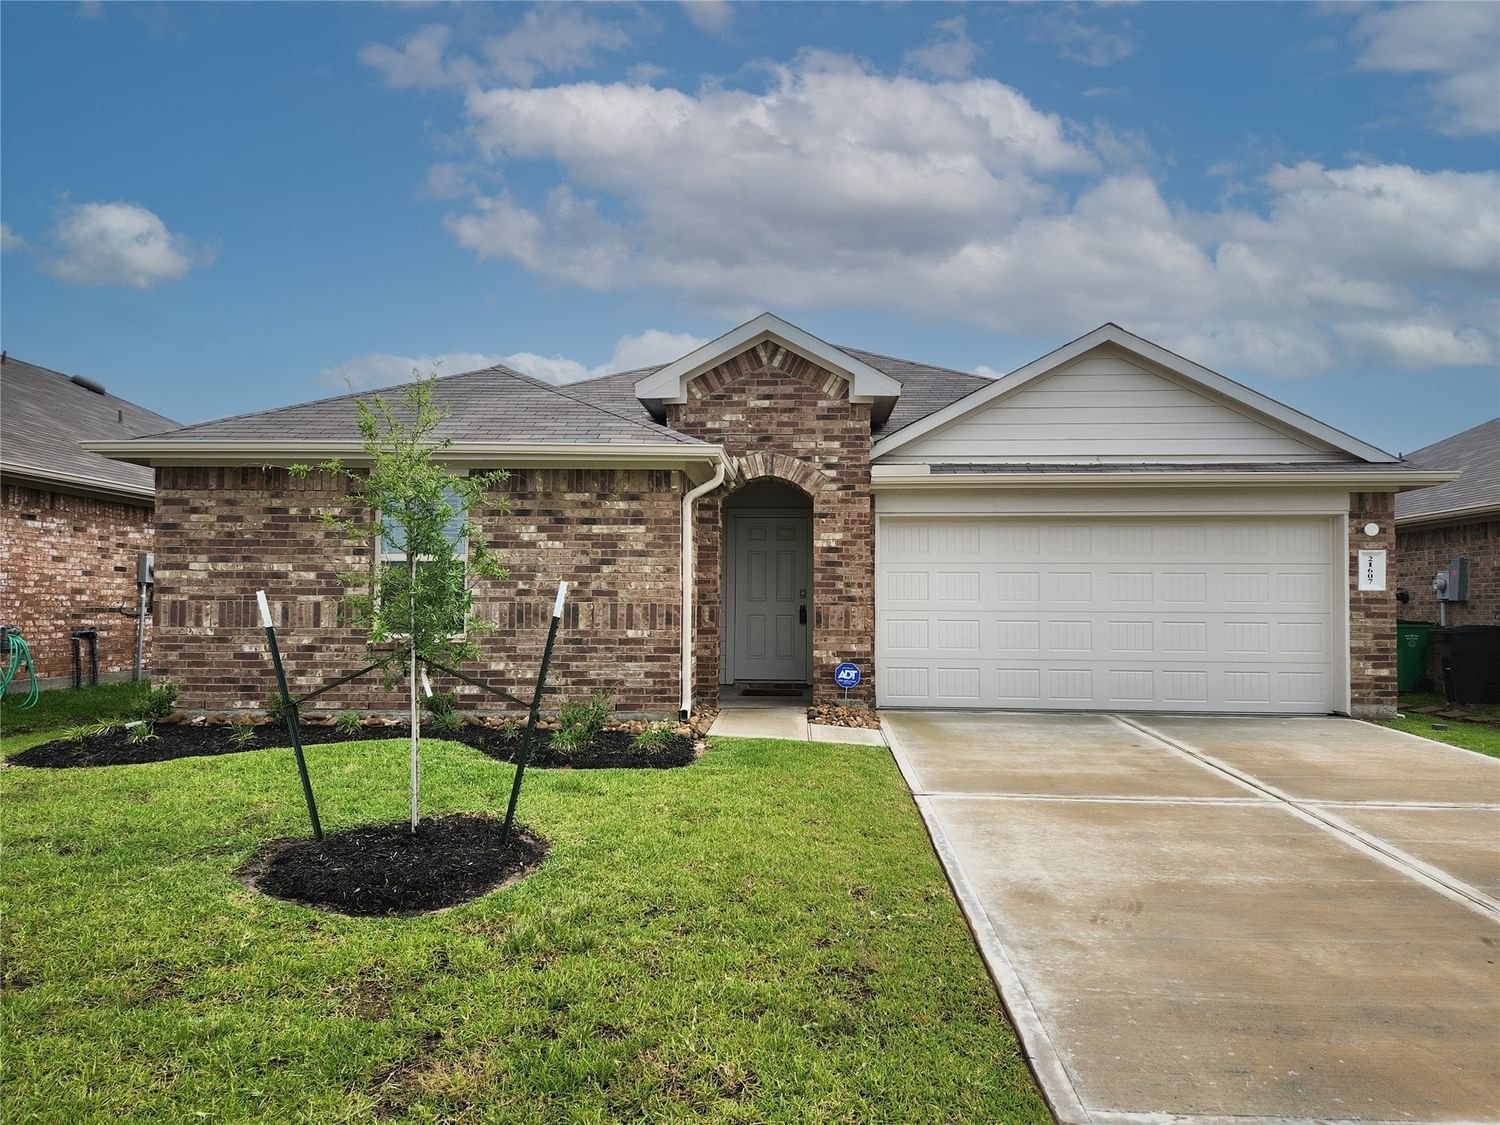 Real estate property located at 21607 Violet Ridge, Harris, Jasmine Height, Katy, TX, US